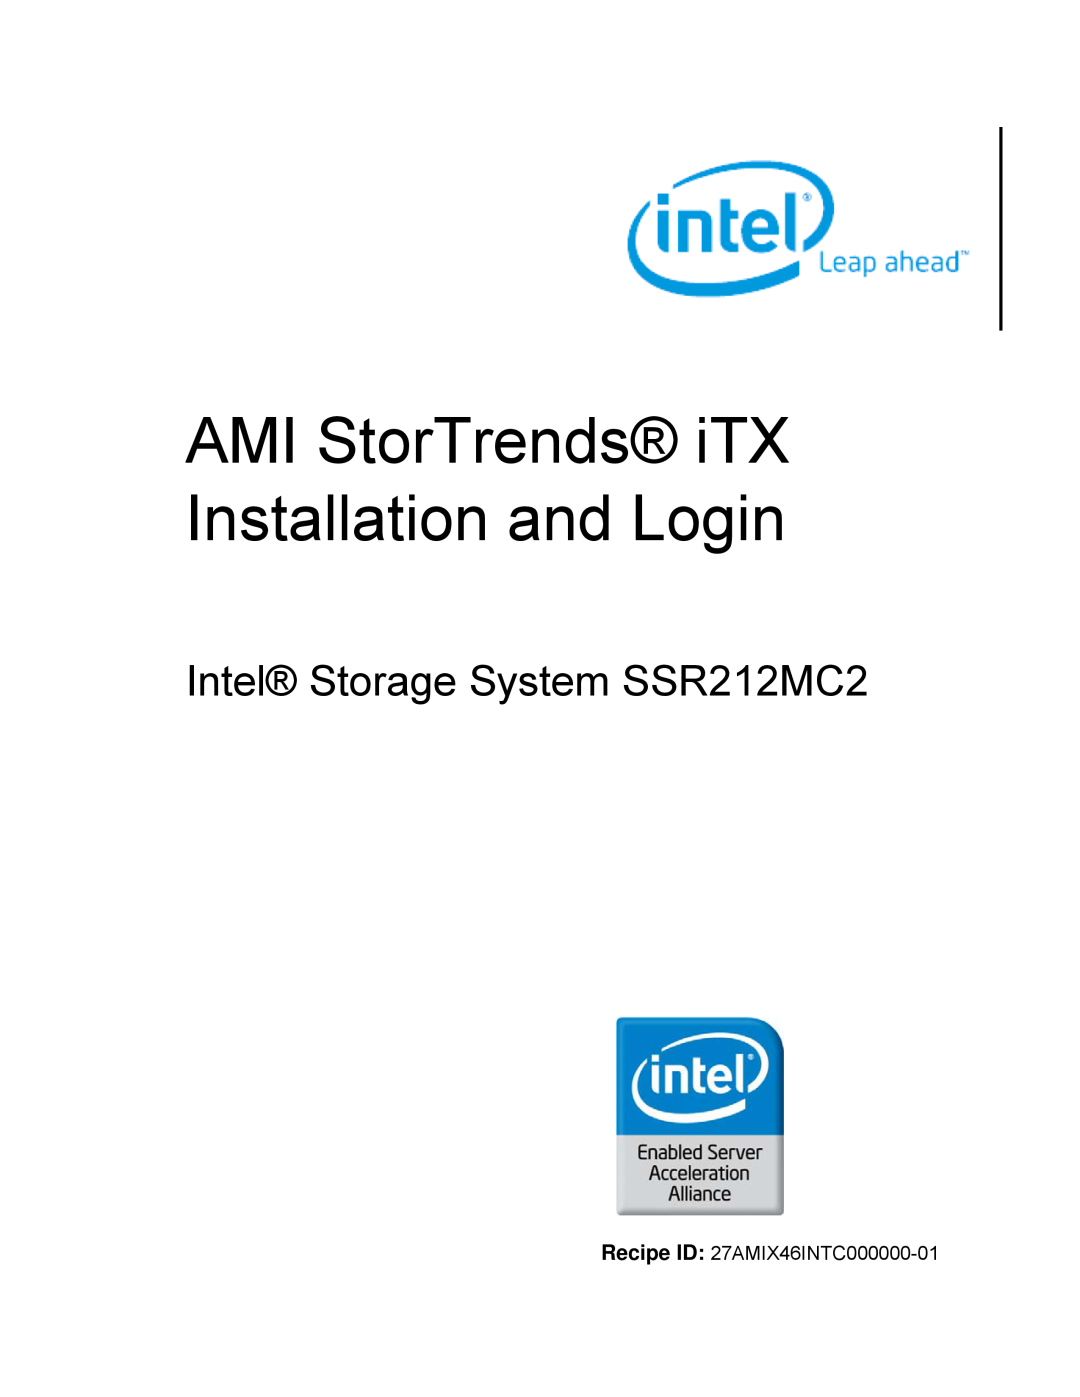 Intel manual AMI StorTrends iTX Installation and Login, Intel Storage System SSR212MC2 